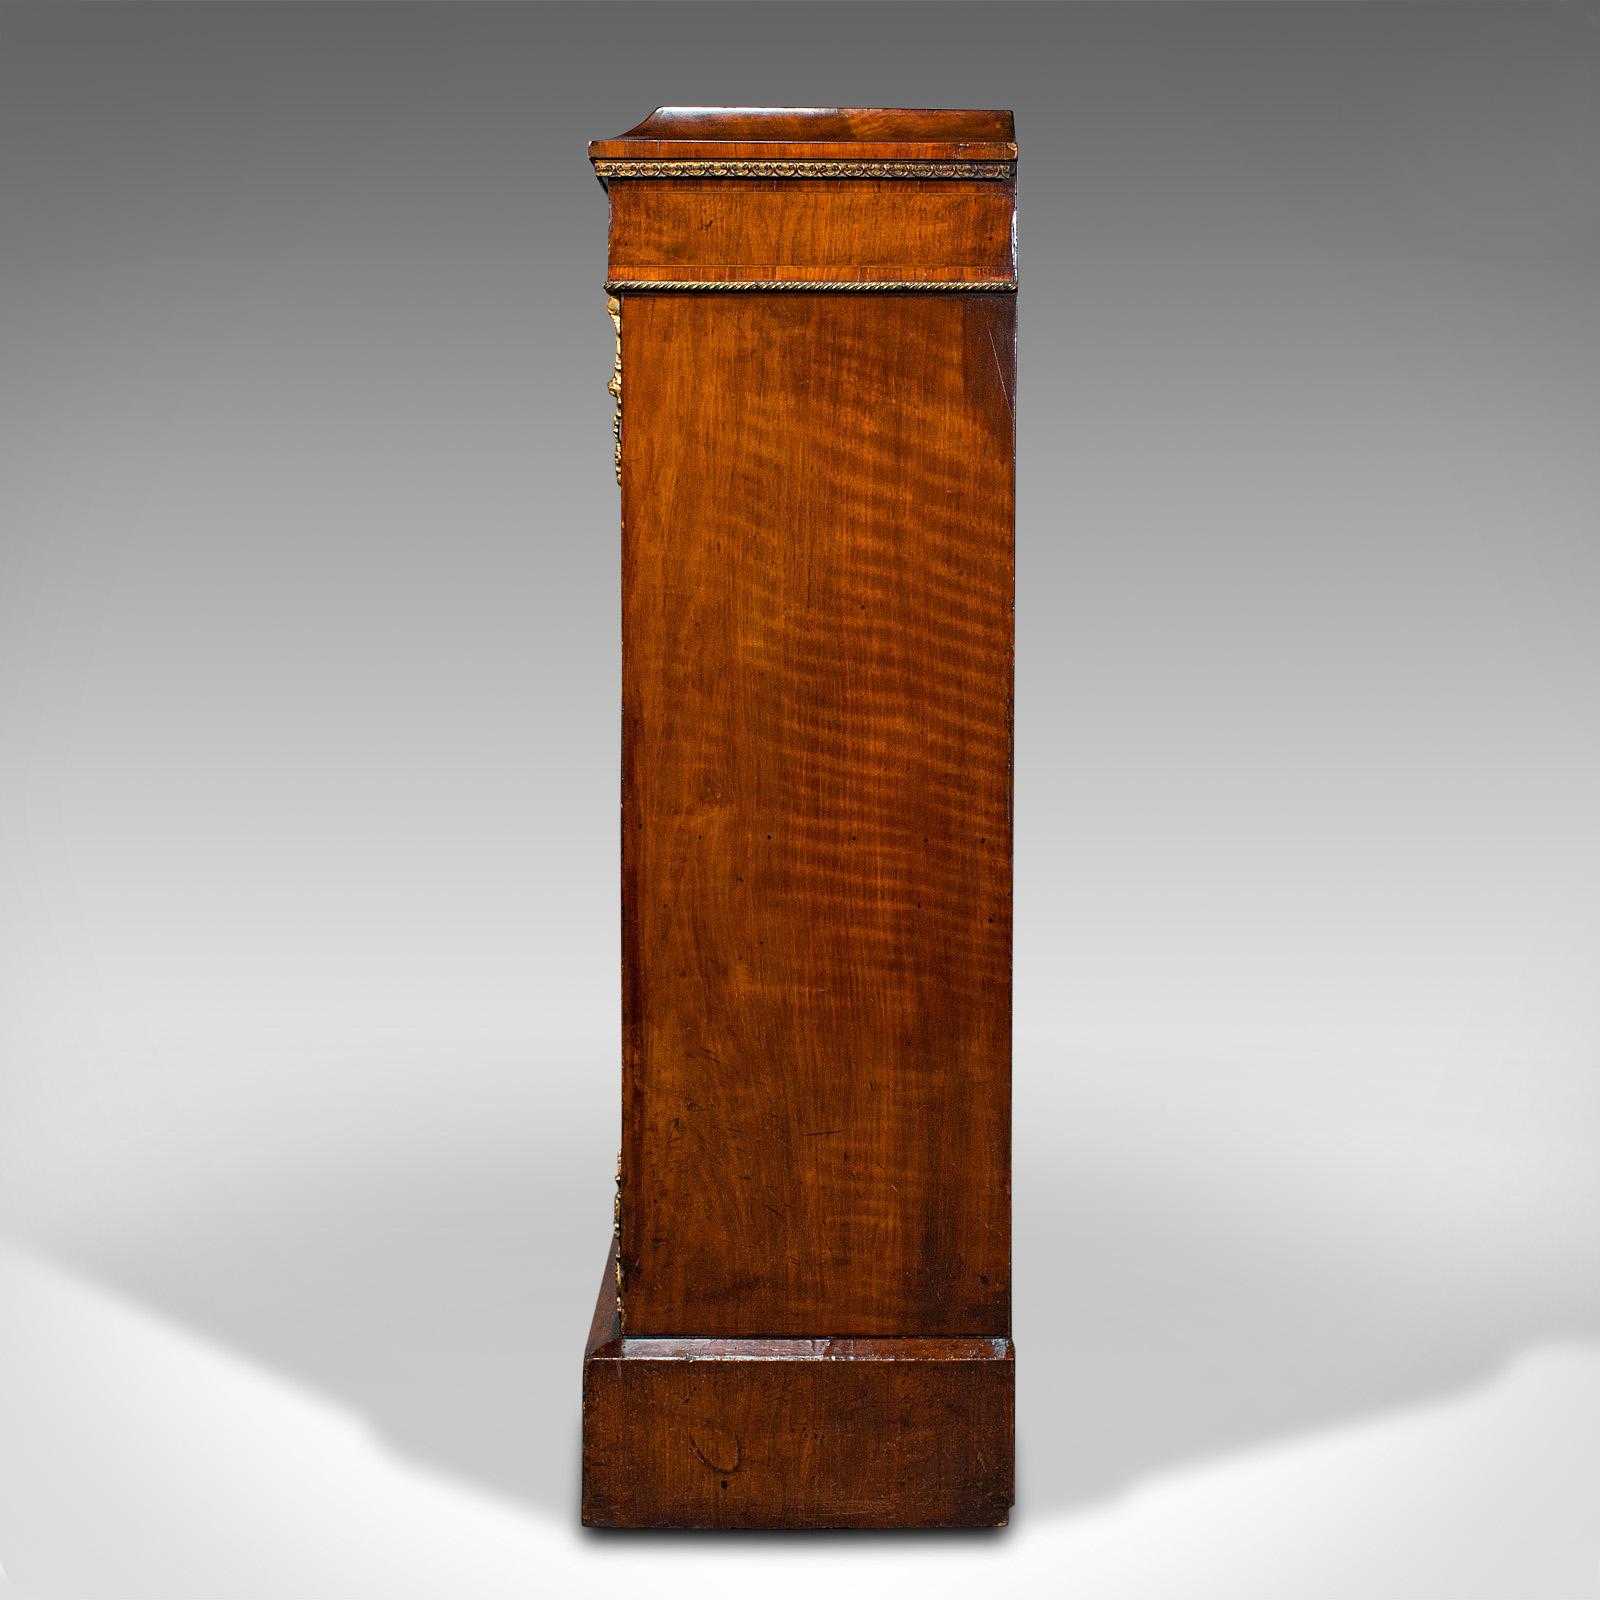 19th Century Antique Display Bookcase, English, Walnut, Boxwood, Empire, Cabinet, Regency